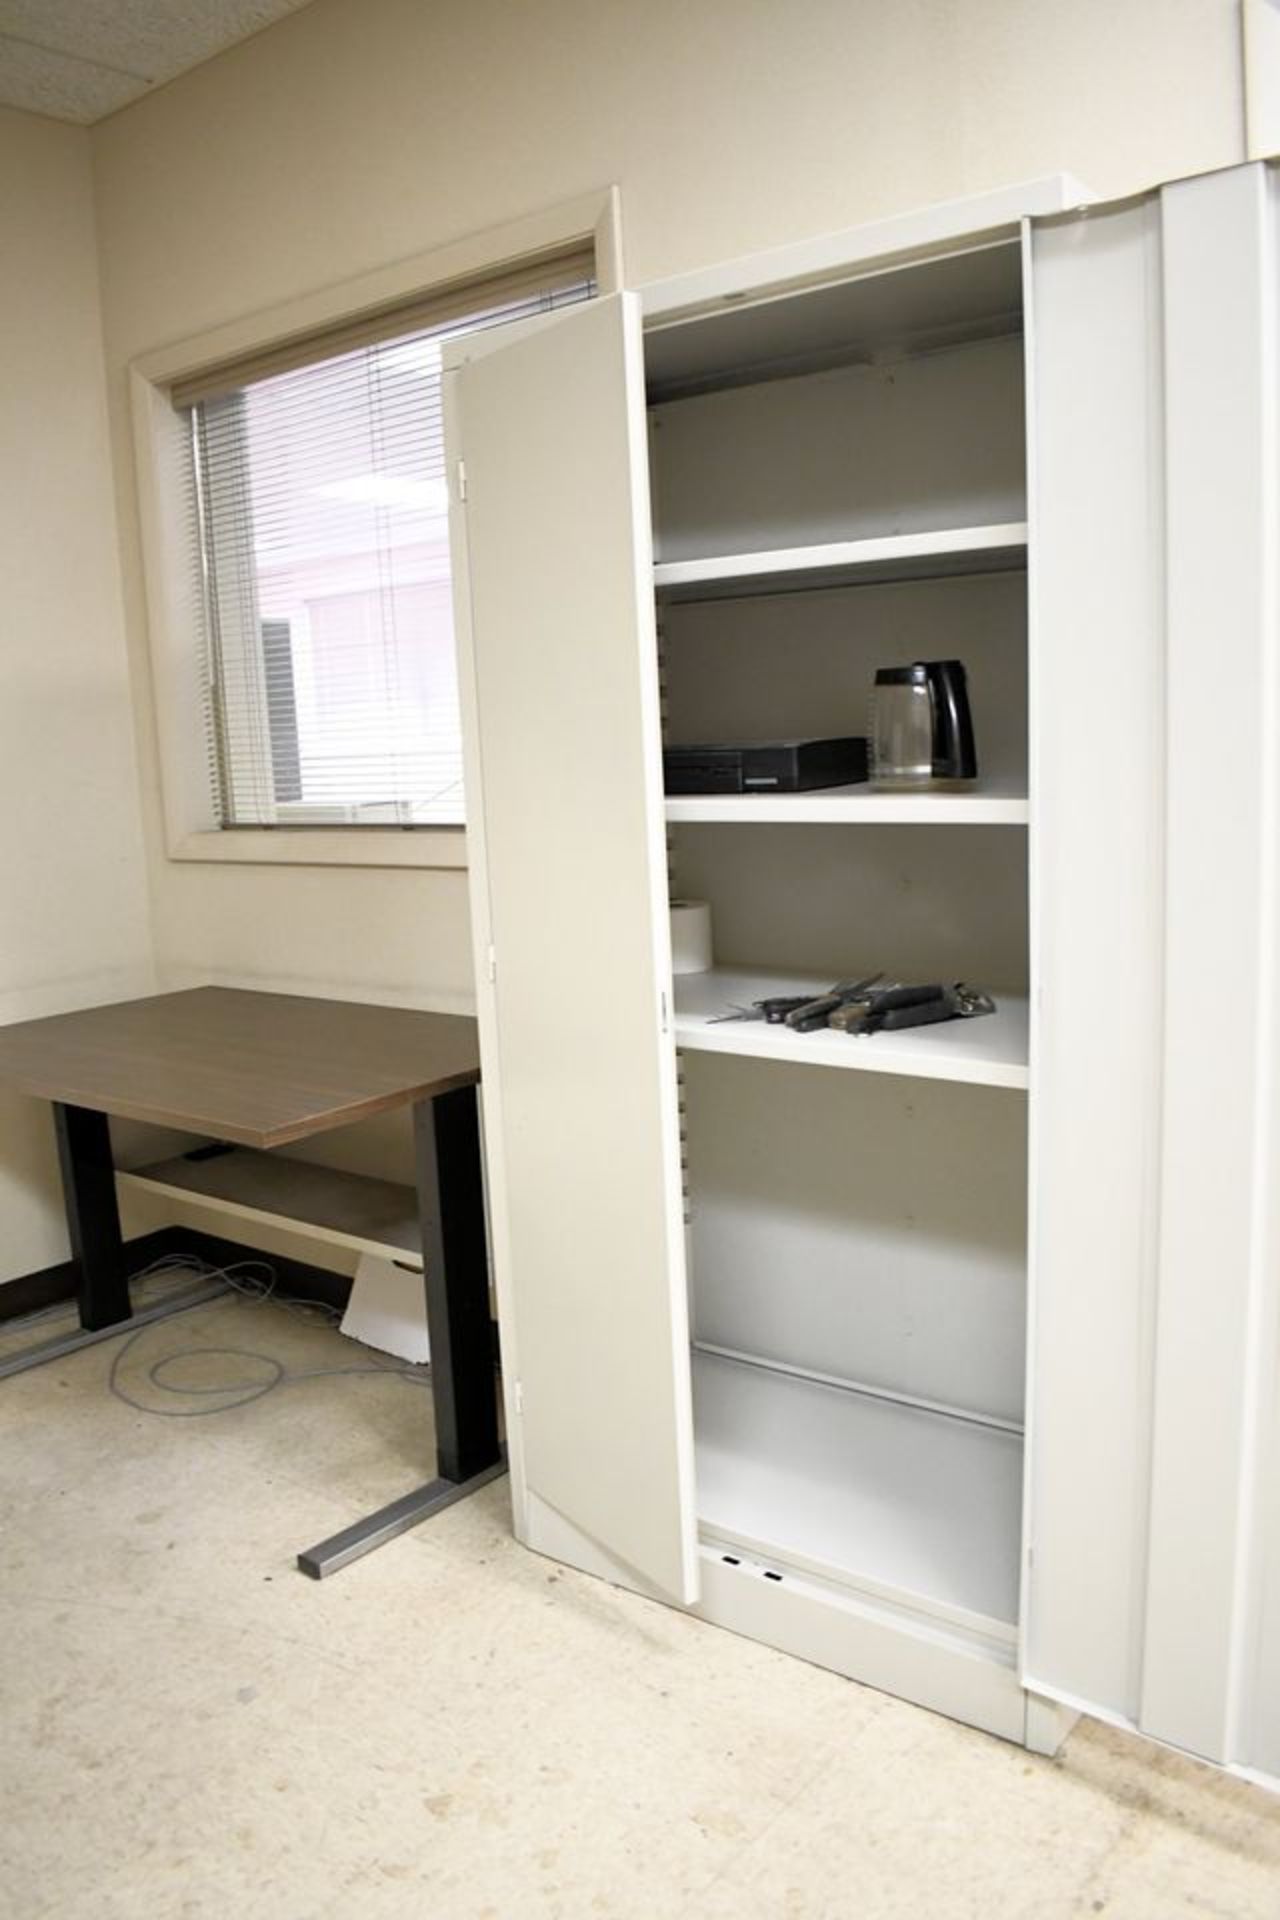 Lot - (2) Desks, (2) Tables, (1) File Cabinet, (1) 2-Door Cabinet, (1) Refrigerator, and Cubicle - Image 3 of 3